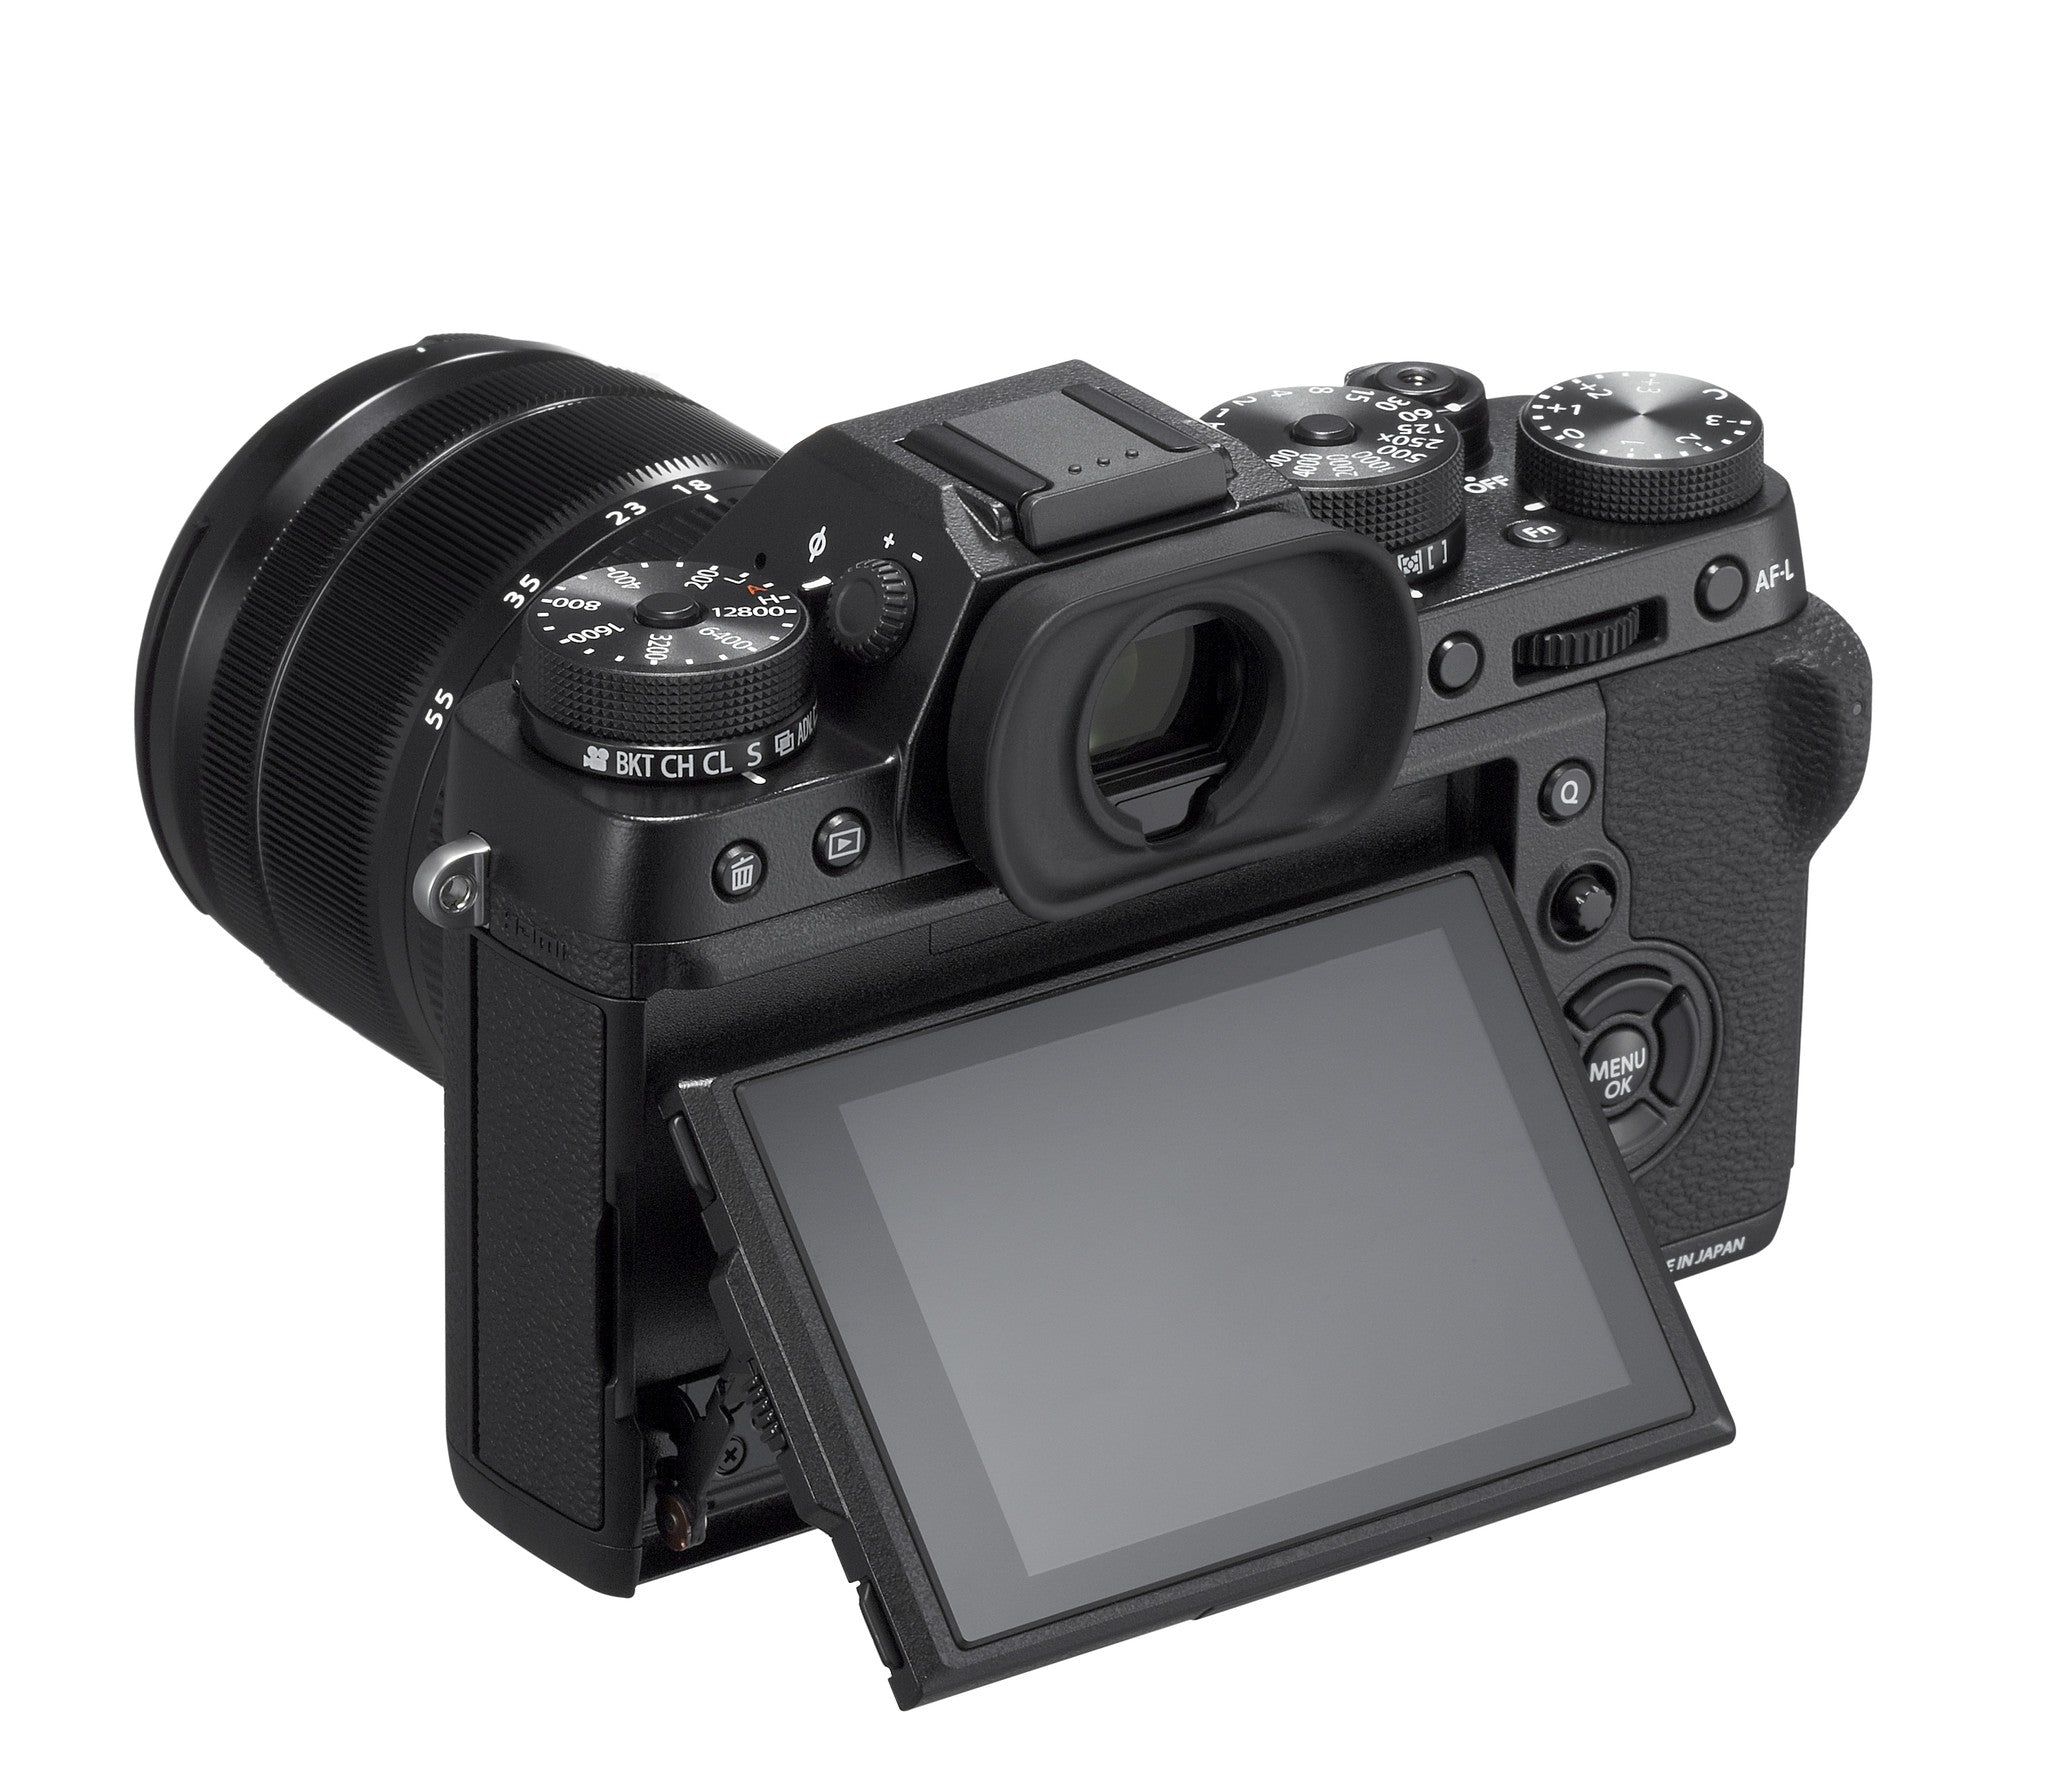 Fujifilm X-T2 Digital Camera w/ 18-55mm Lens Kit (Black), camera mirrorless cameras, Fujifilm - Pictureline  - 2